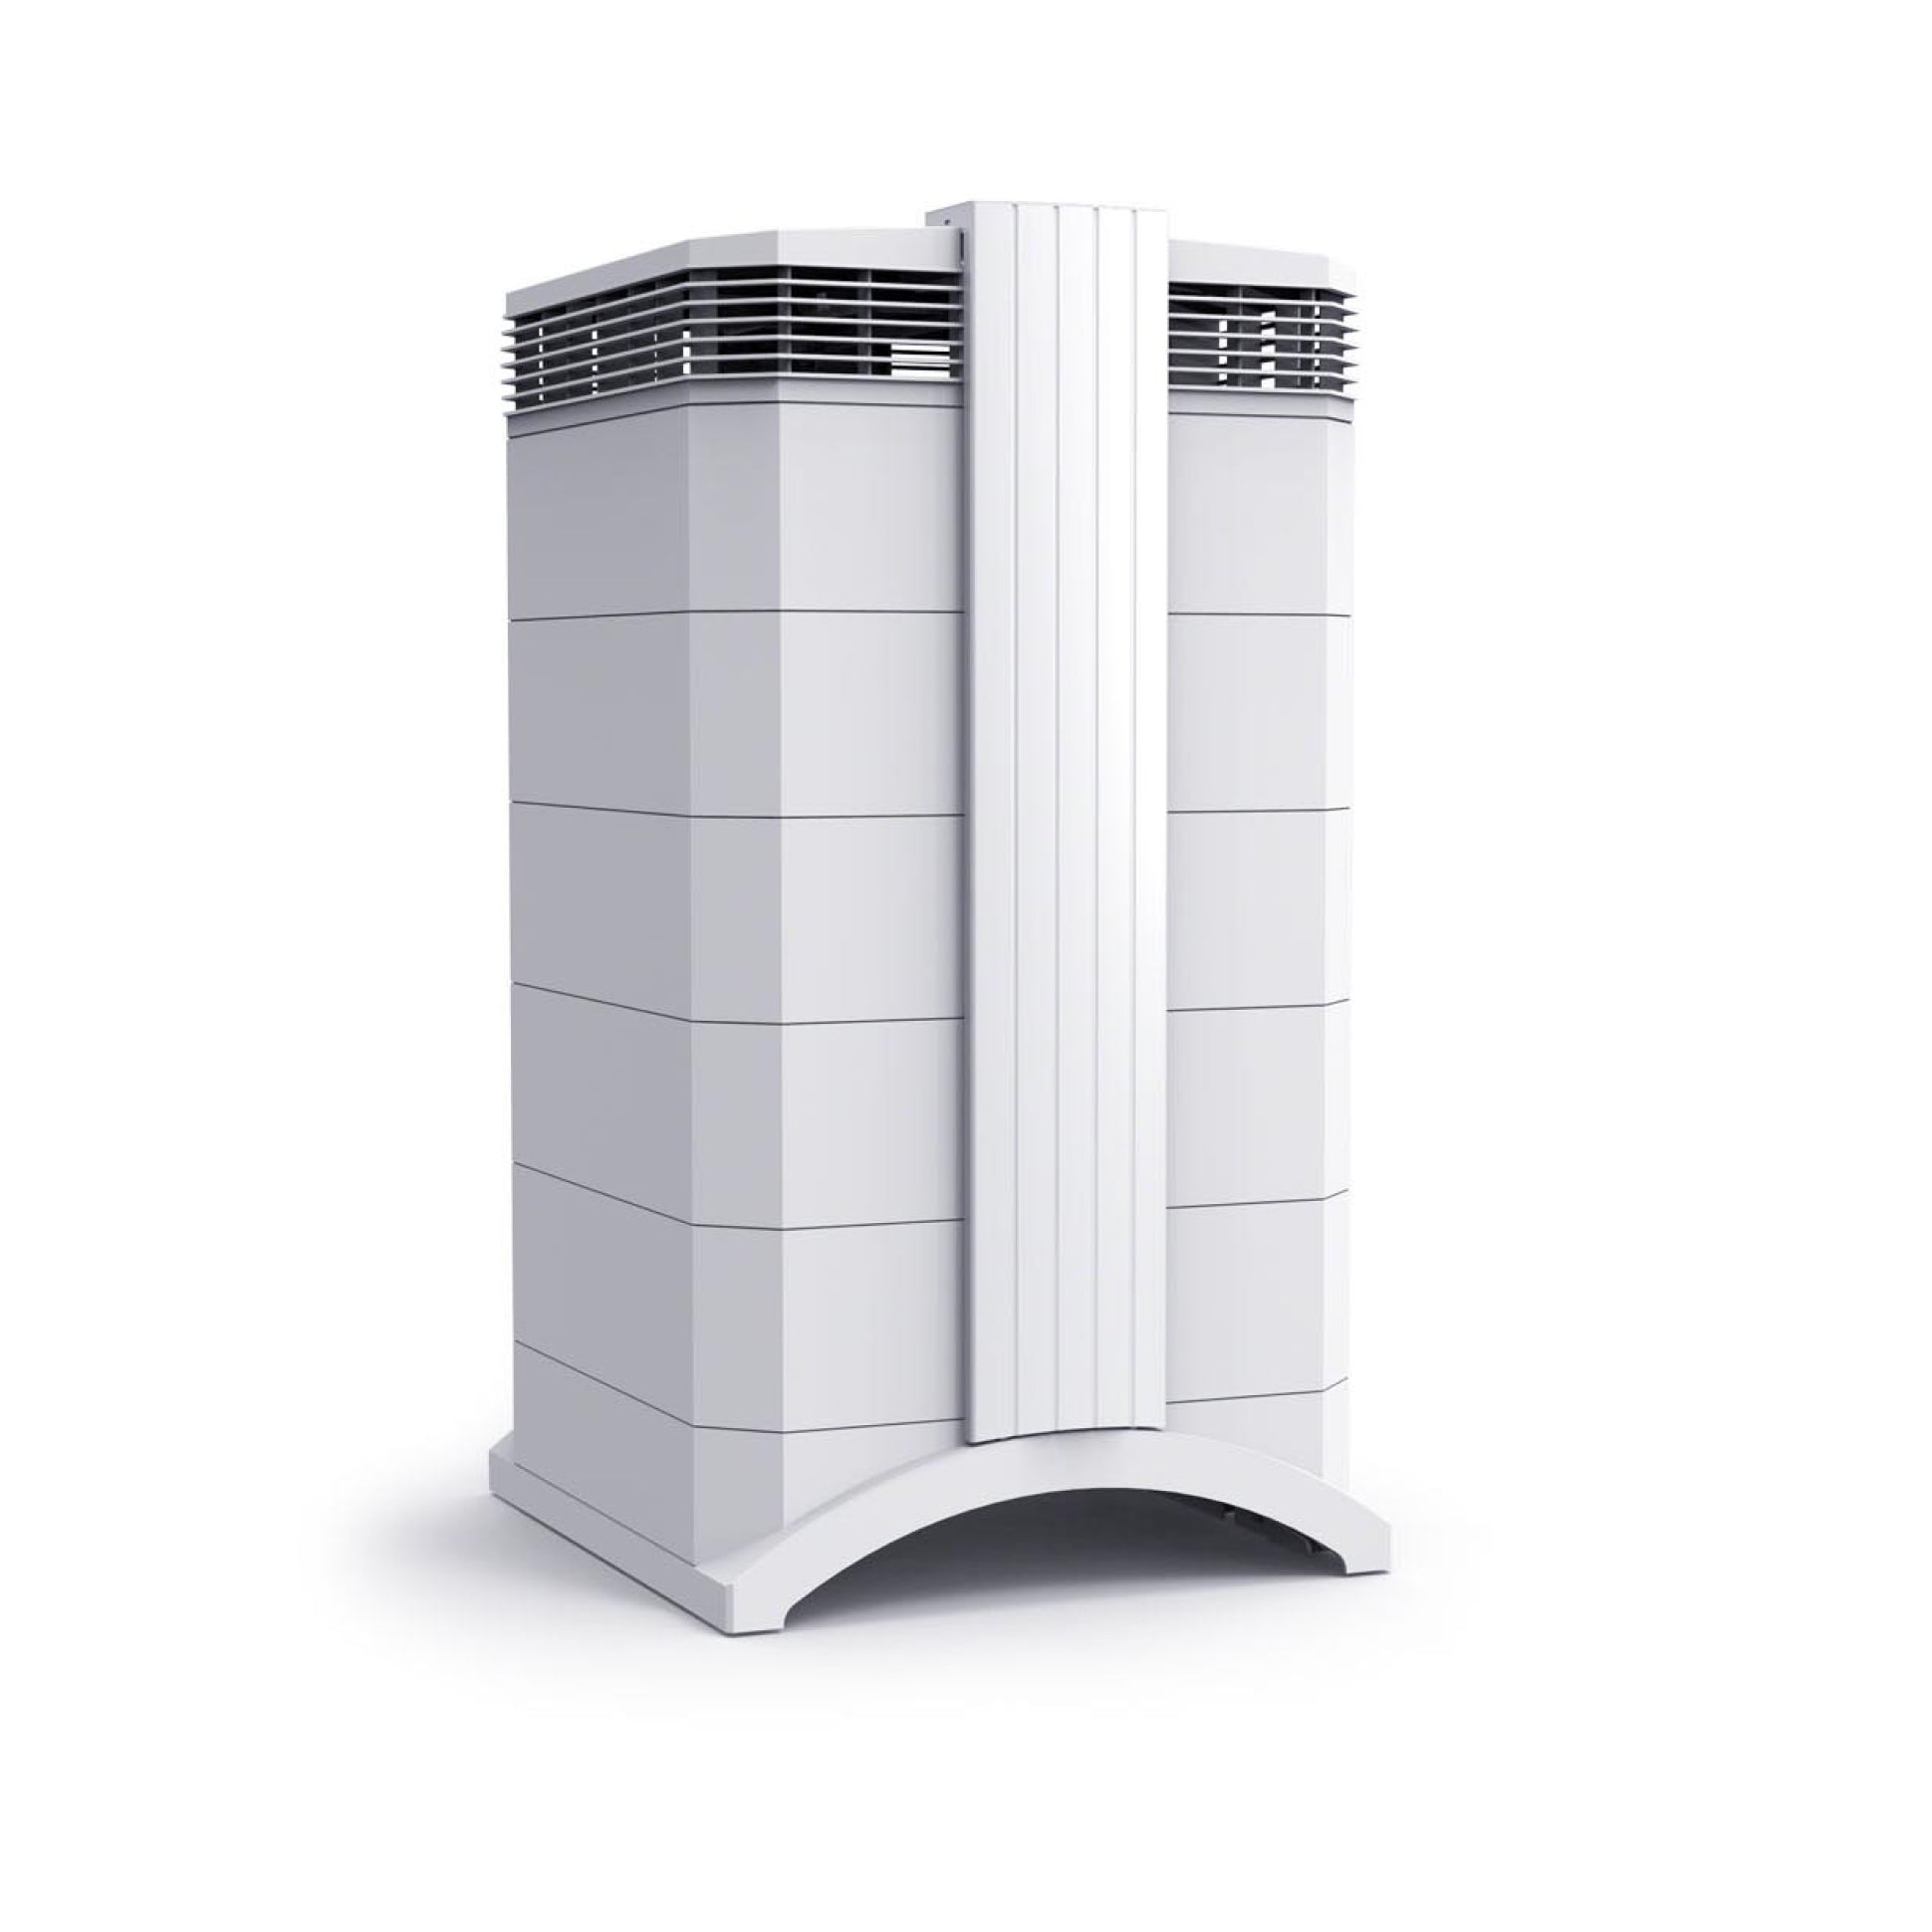 IQAir HealthPro air purifier for allergies